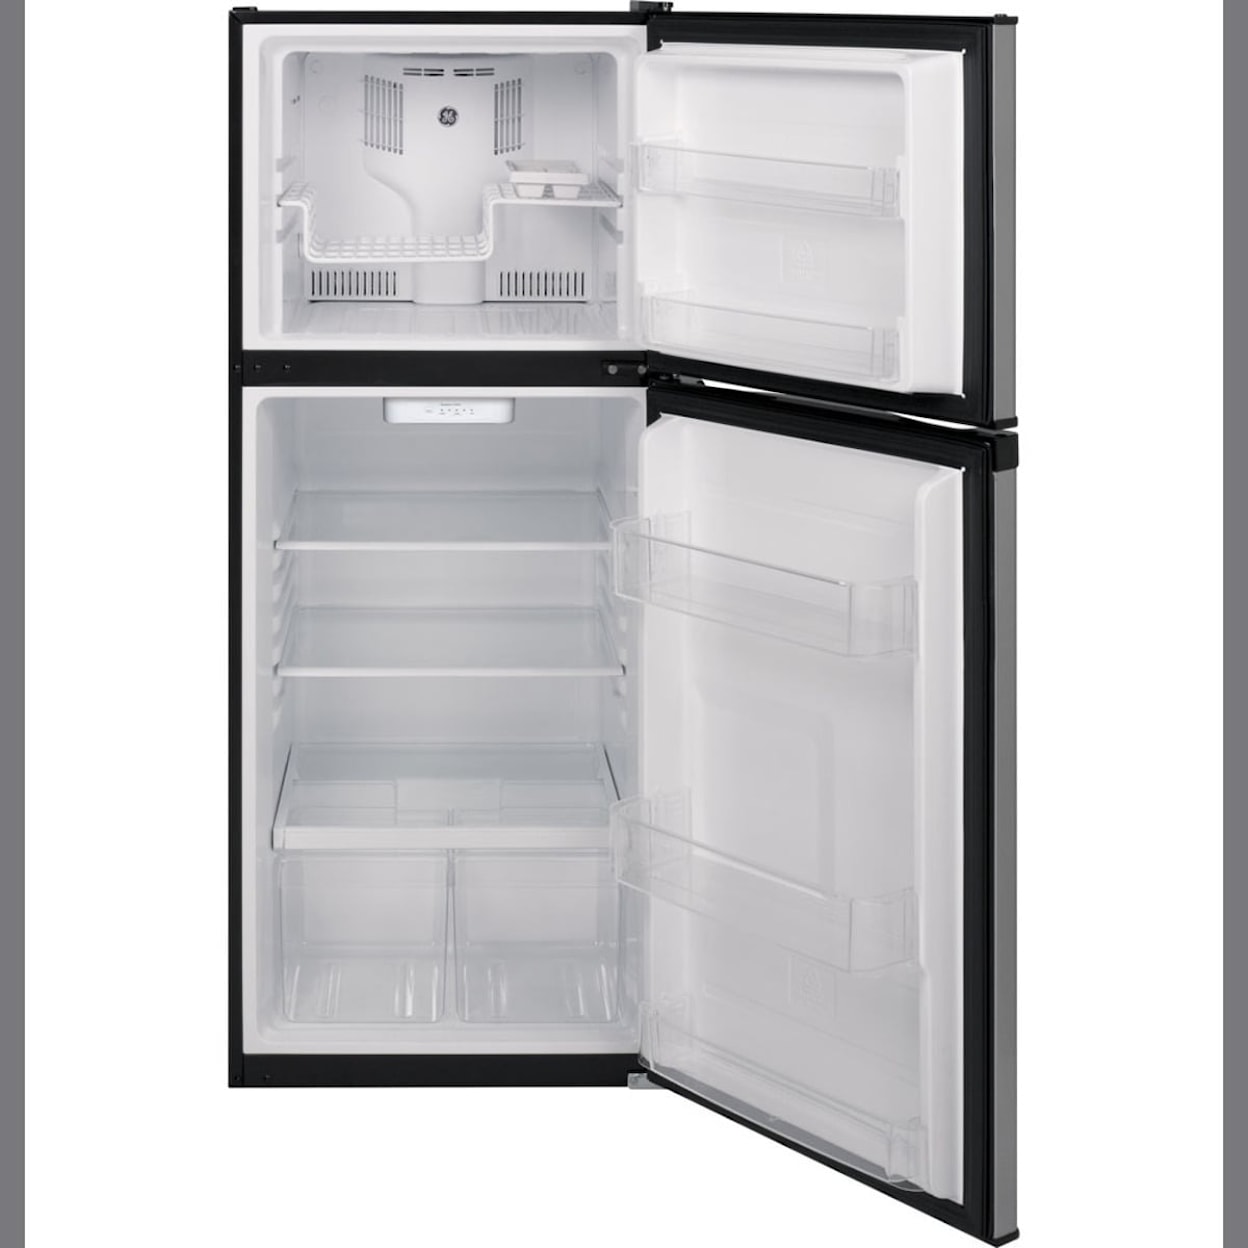 GE Appliances Refridgerators Top Freezer Refrigerator